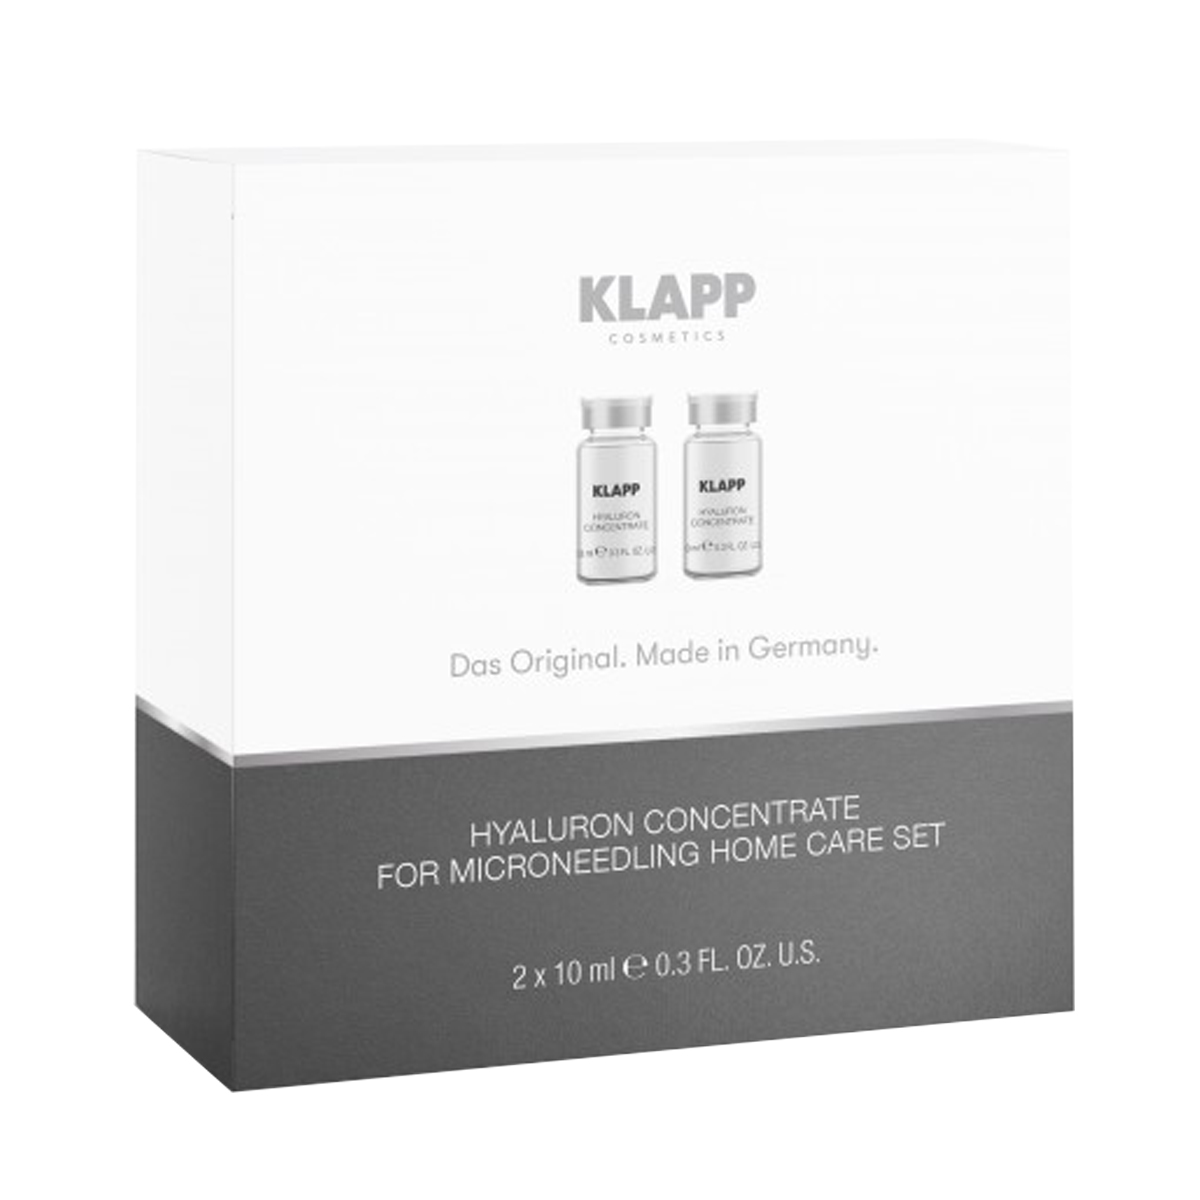 KLAPP Nachkaufpackung Hyaluron Concentrate für Microneedling Home Care Set 2 x 10ml